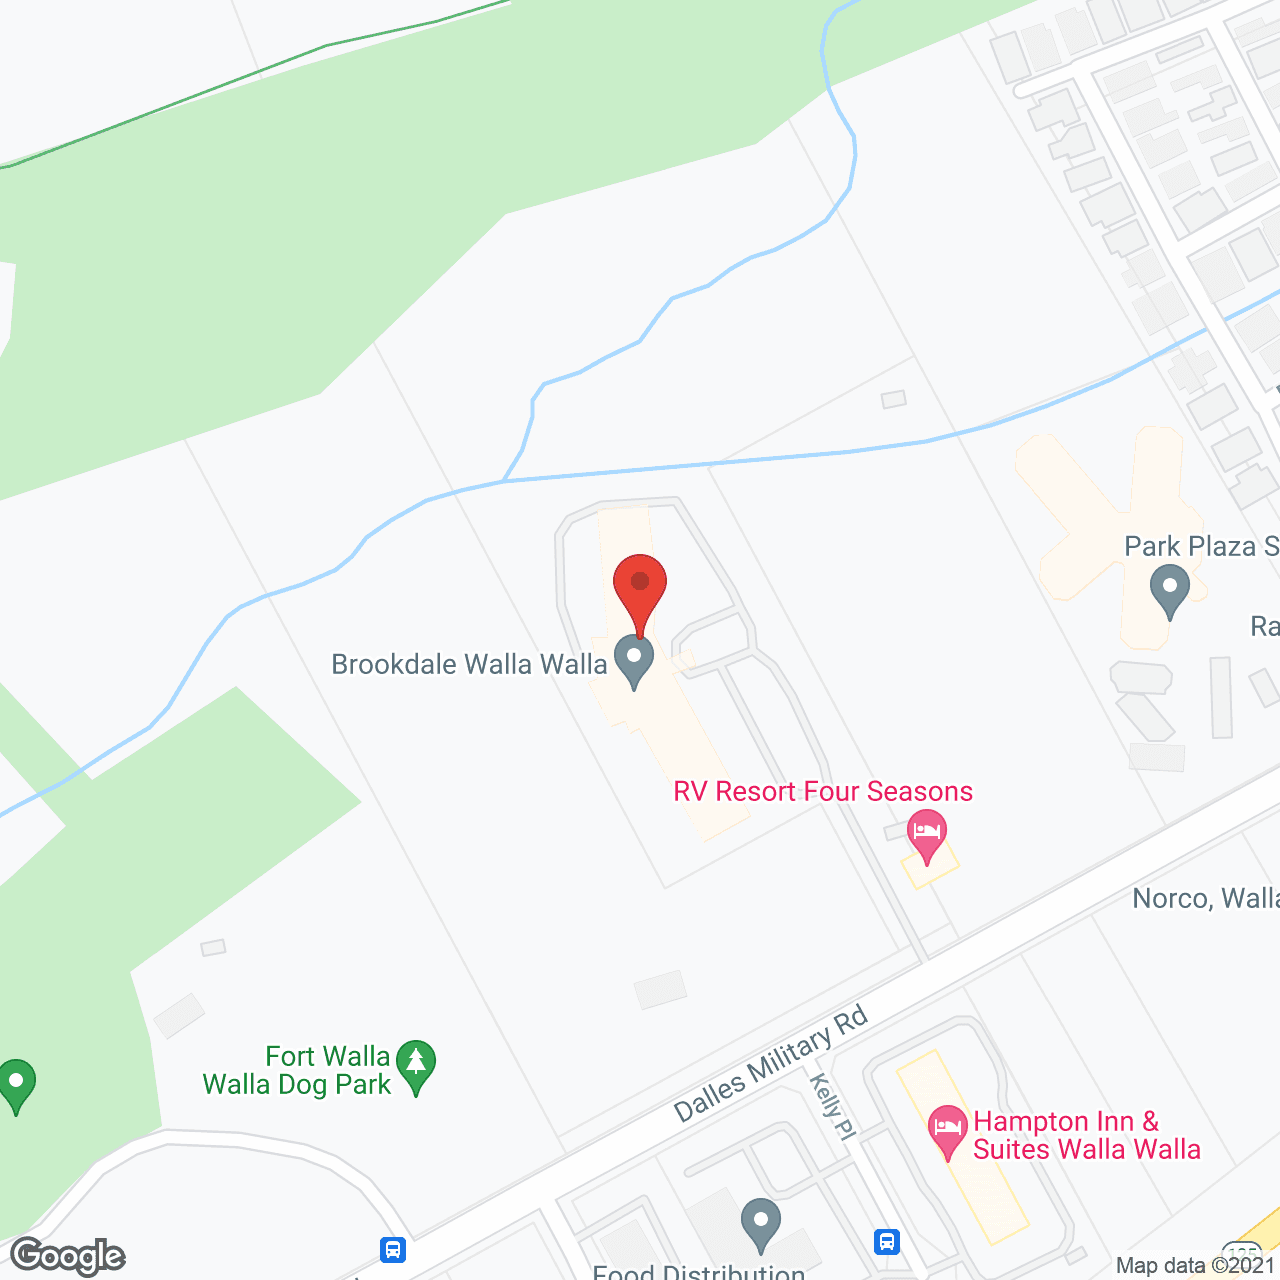 Brookdale Walla Walla in google map